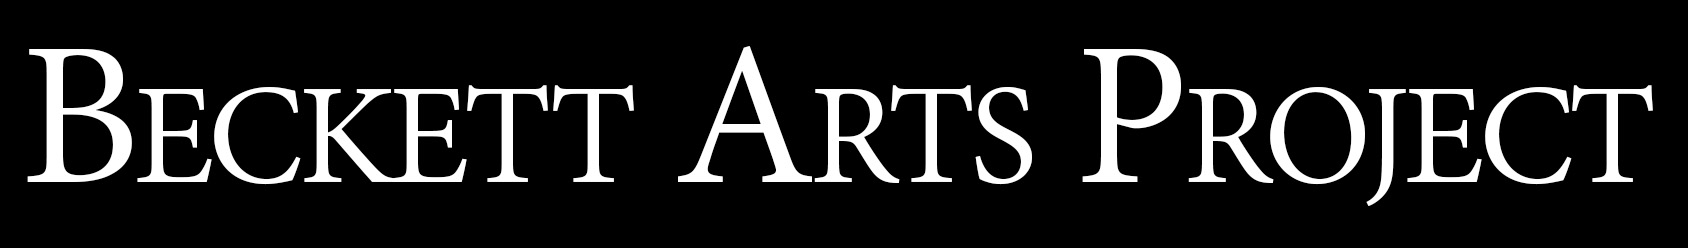 Beckett Arts Project logo